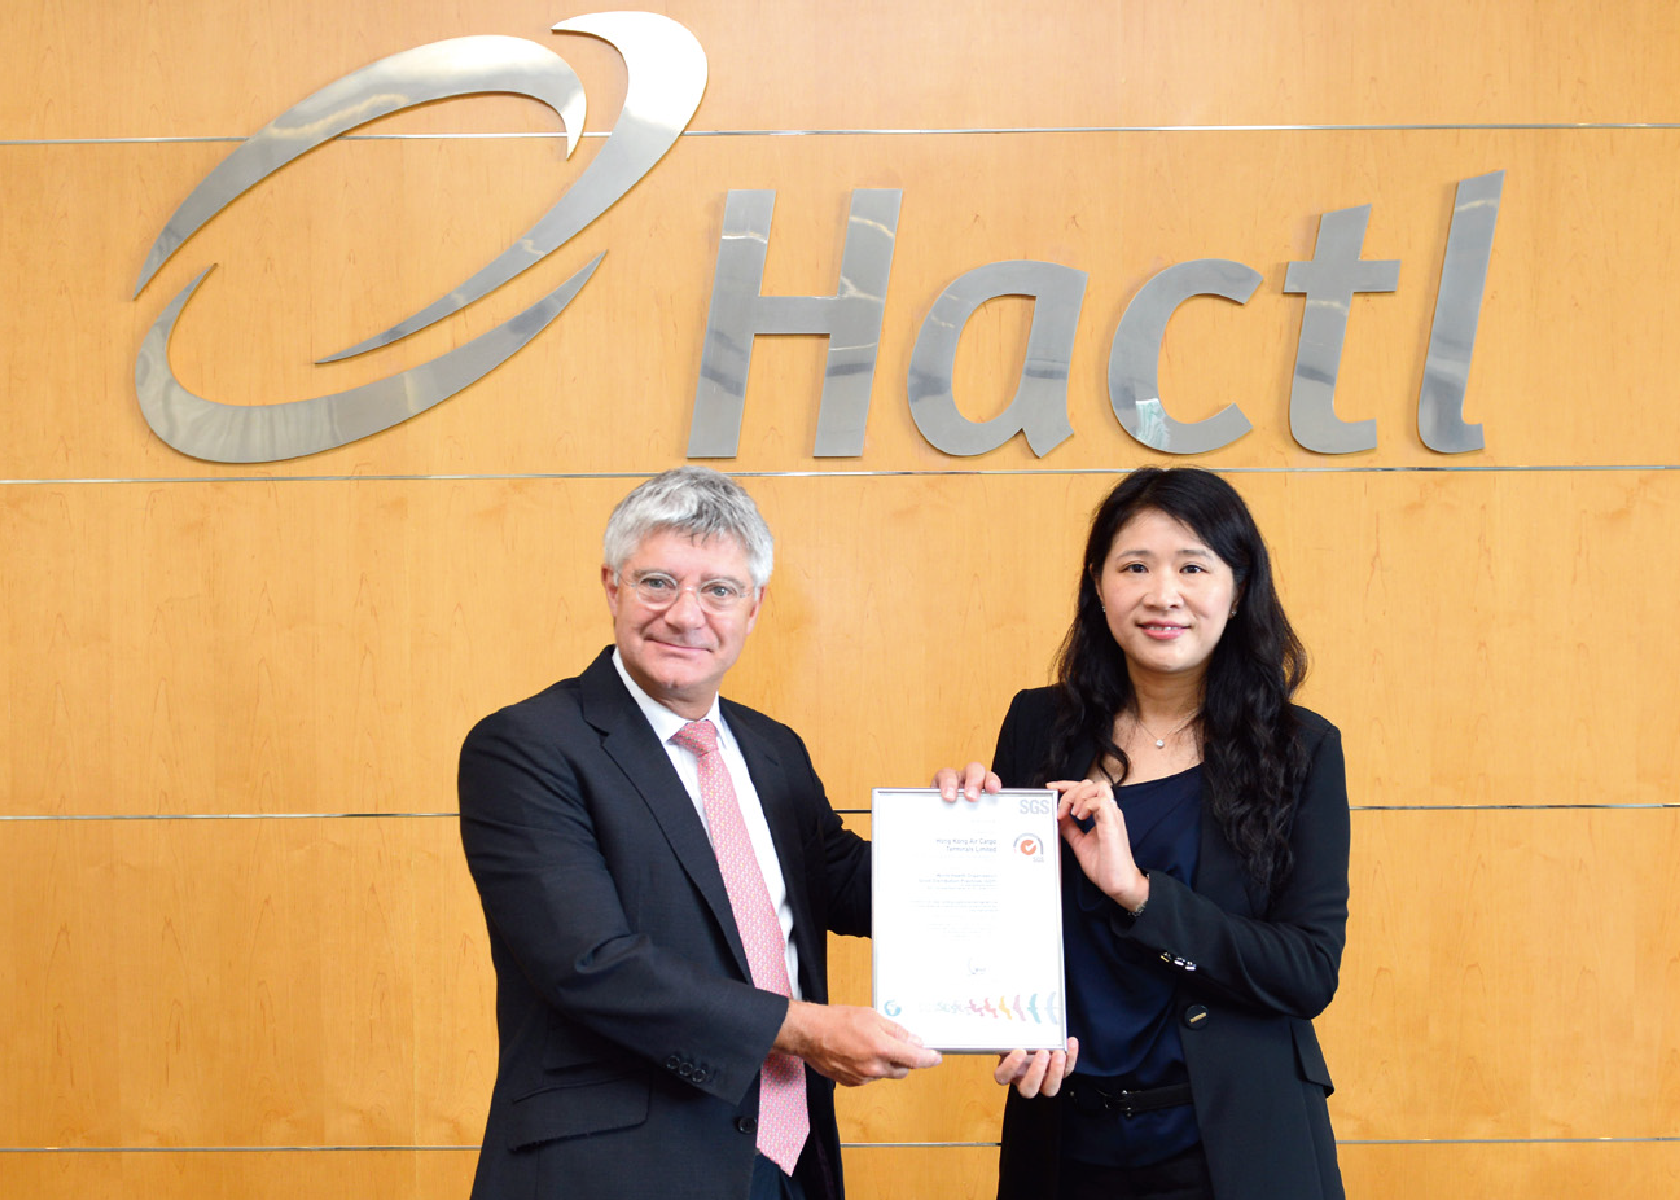 Hactl Pressrelease 20140730 GDP Certificate Retouched